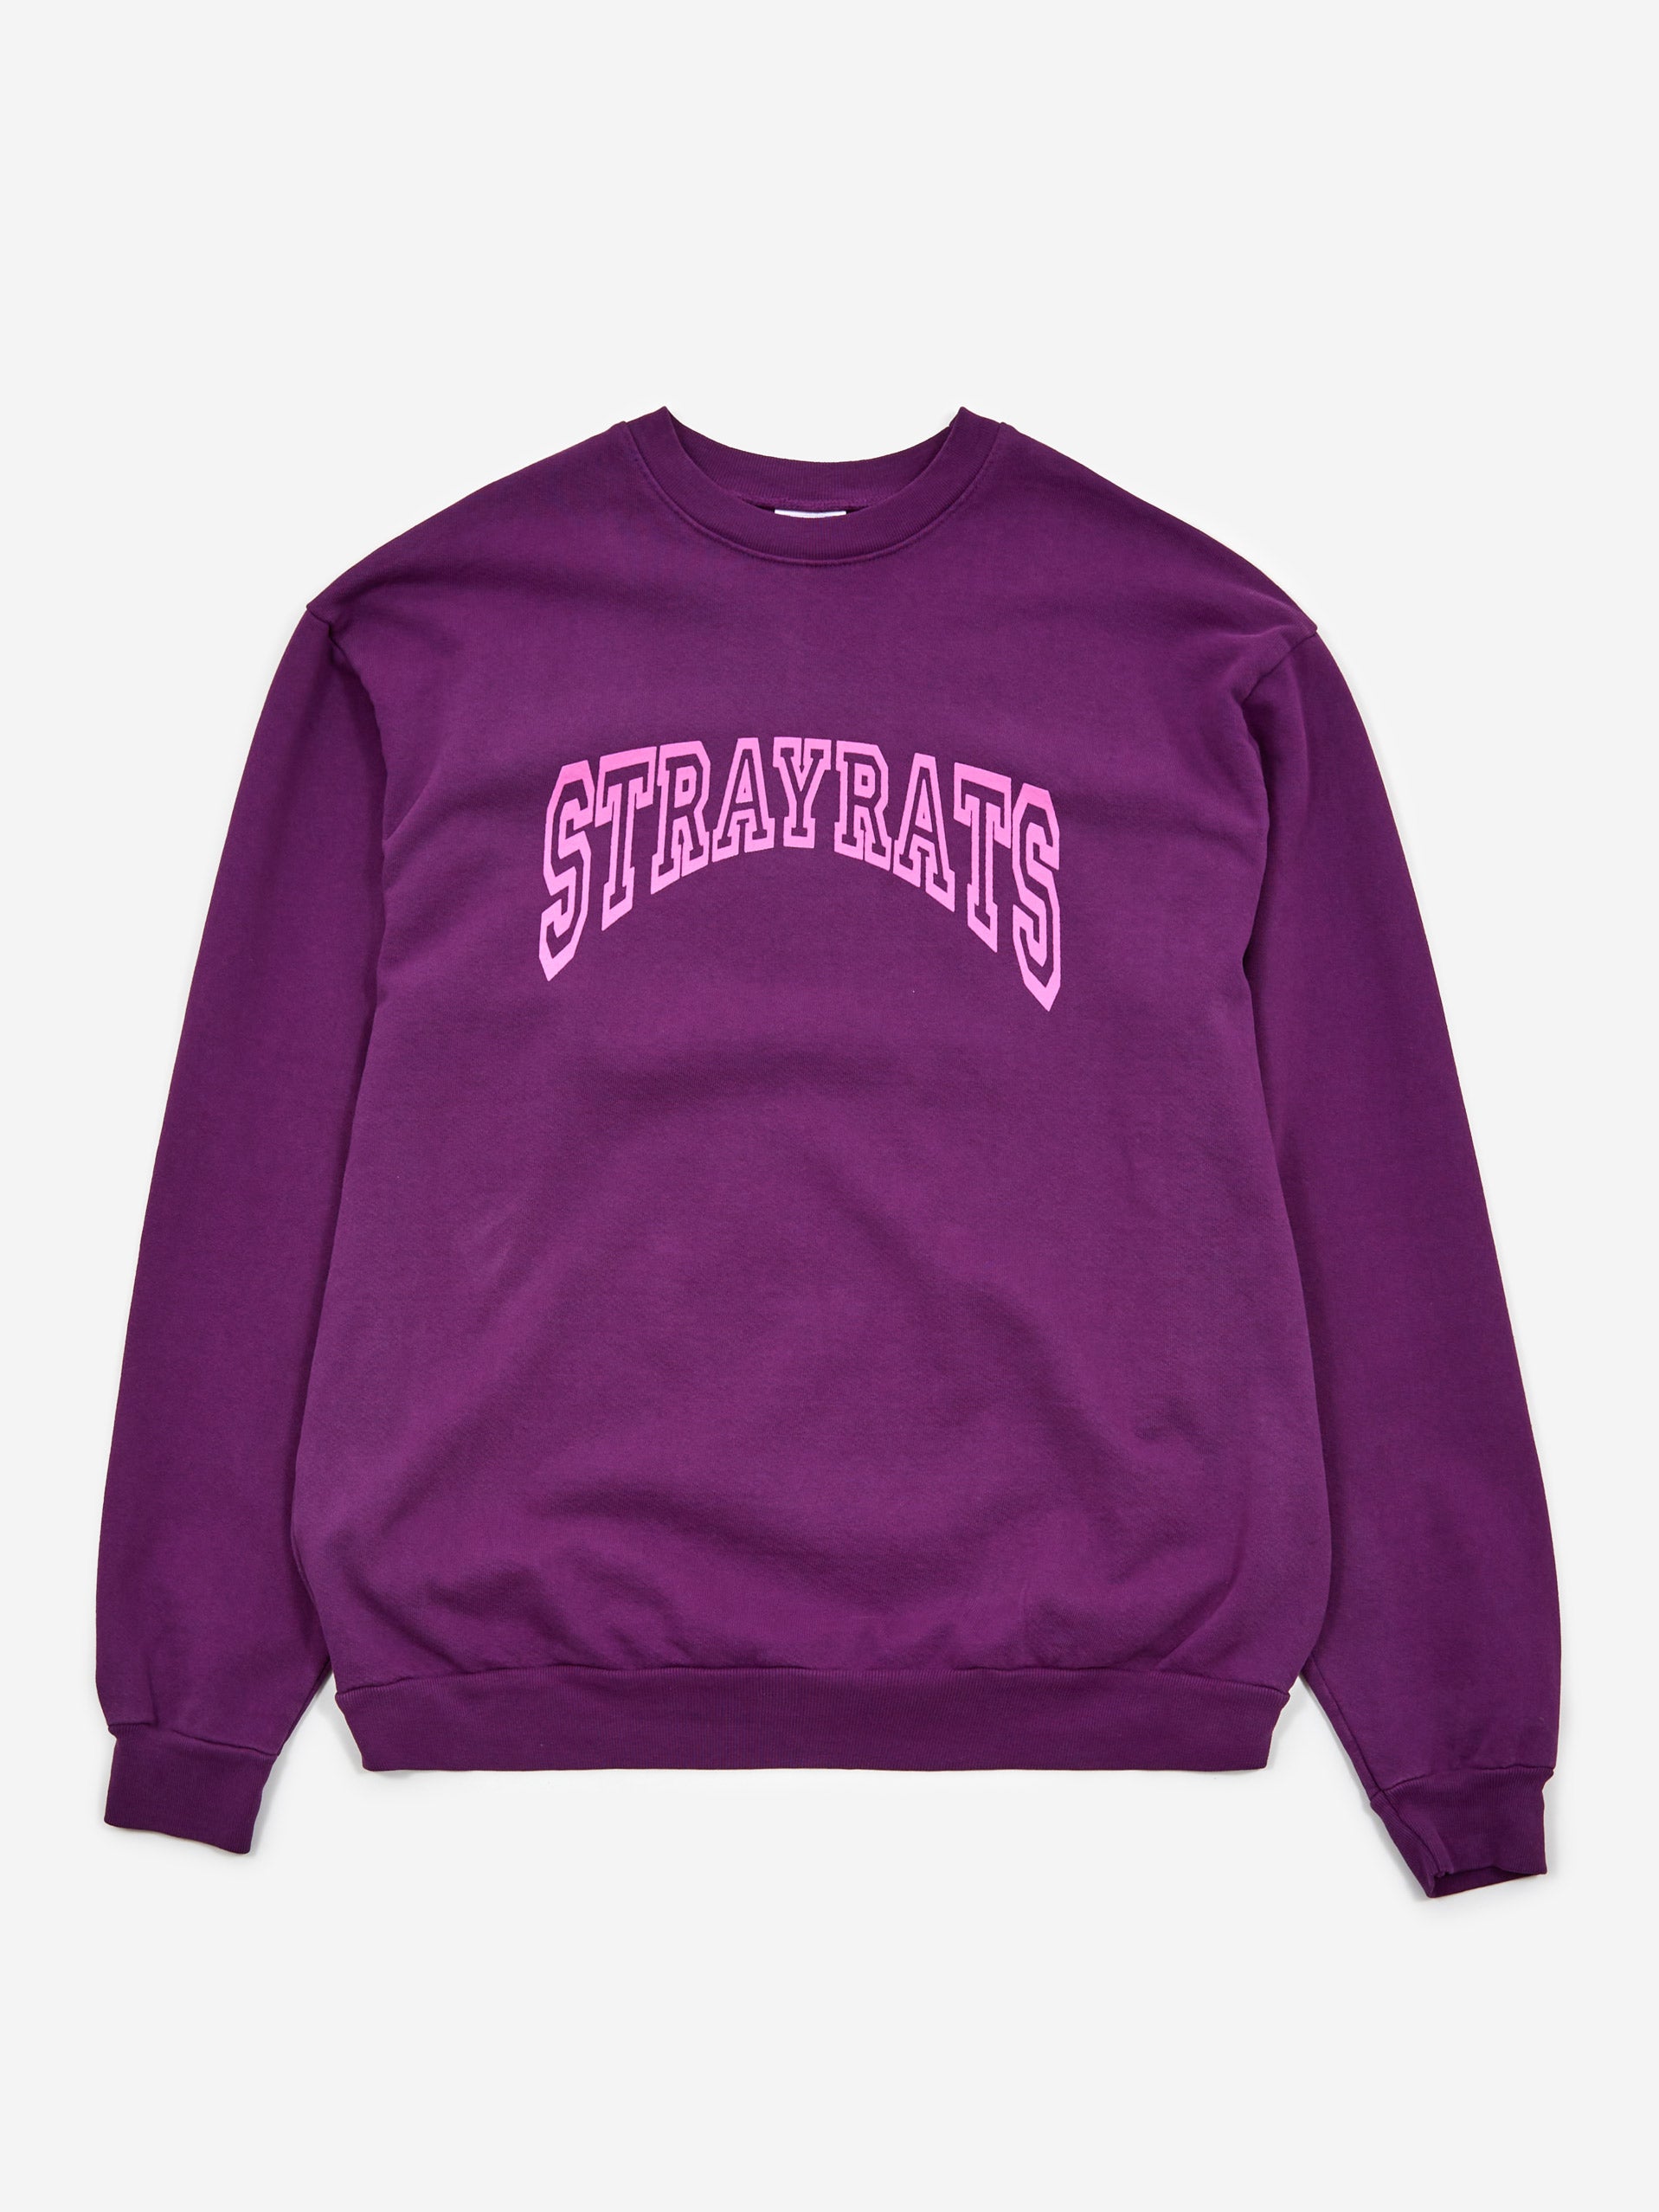 Stray Rats Arch Logo Crew Neck - Purple